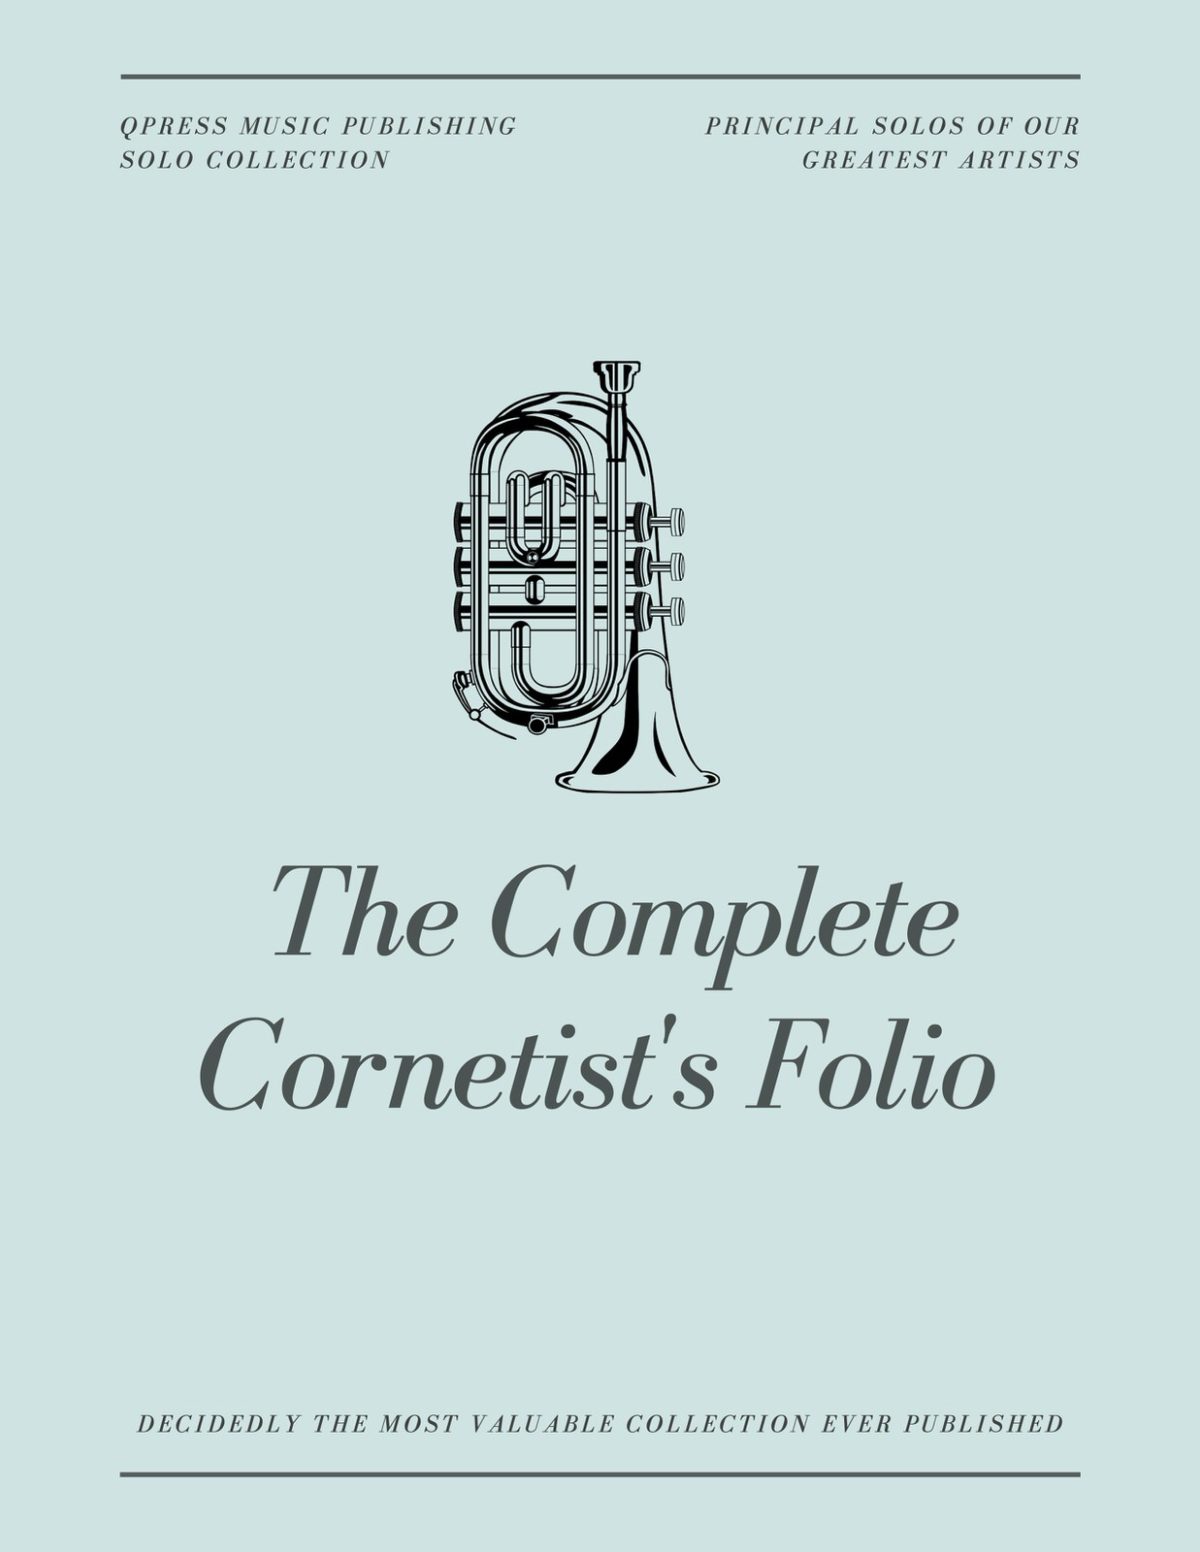 The Complete Cornetist's Folio